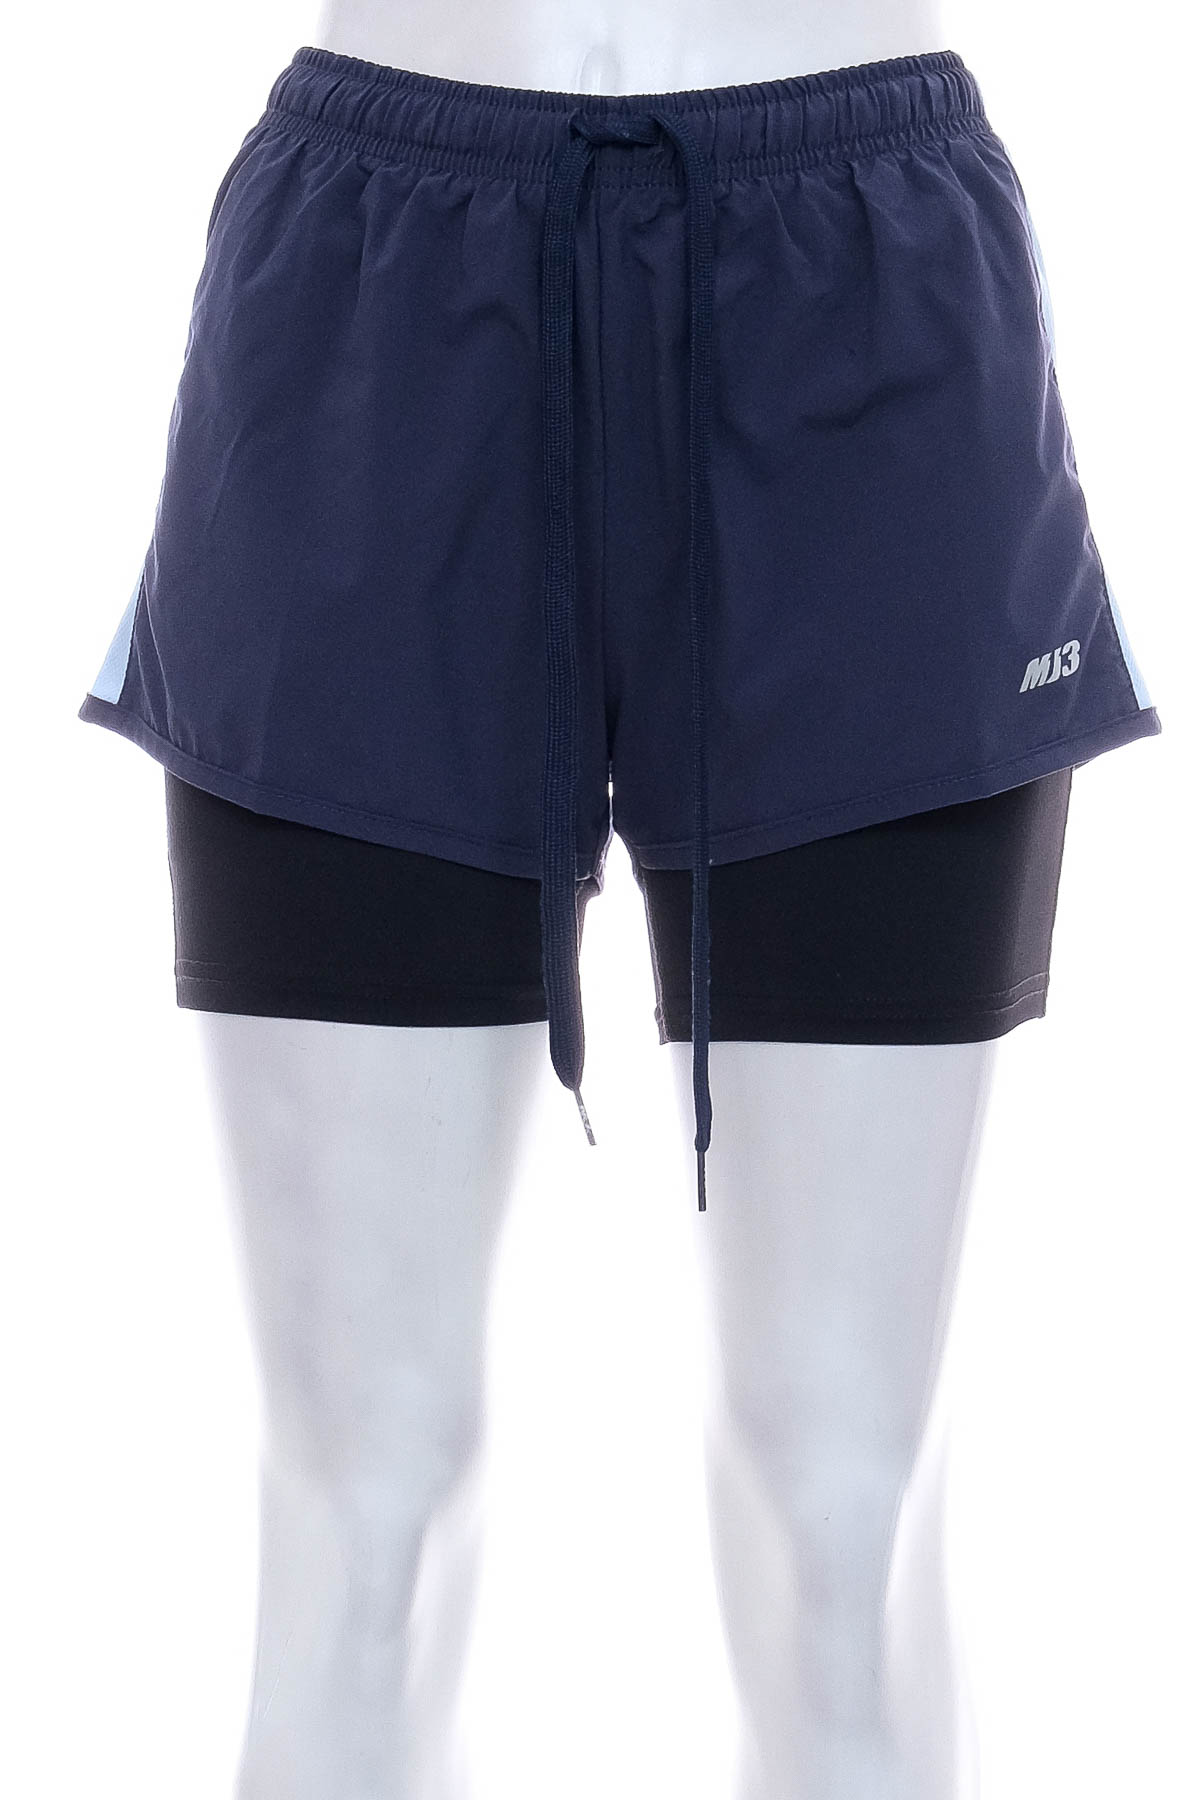 Women's shorts - MJ3 - 0